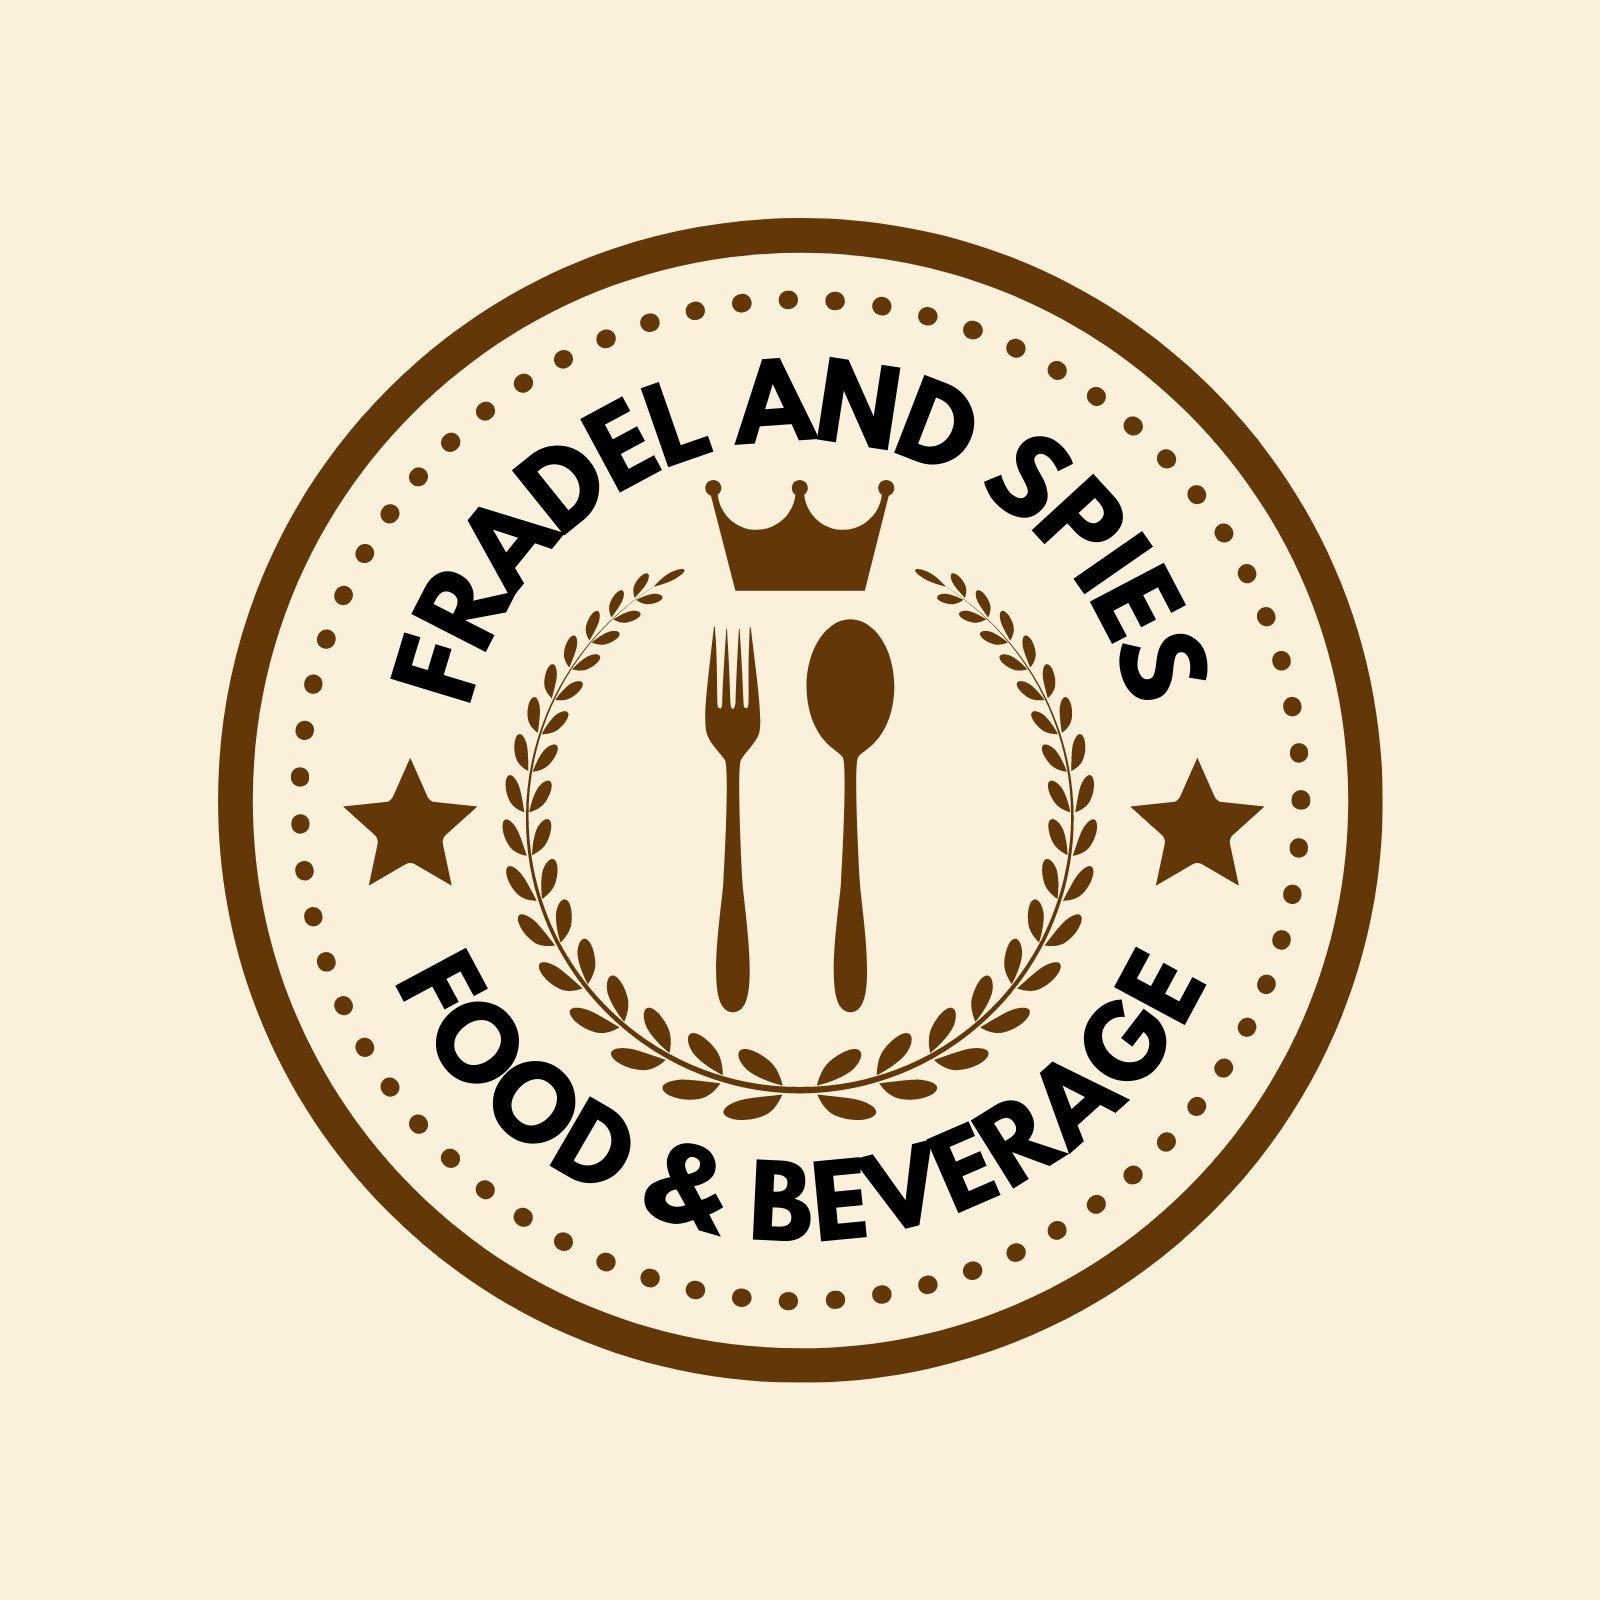 Free printable, customizable restaurant logo templates | Canva